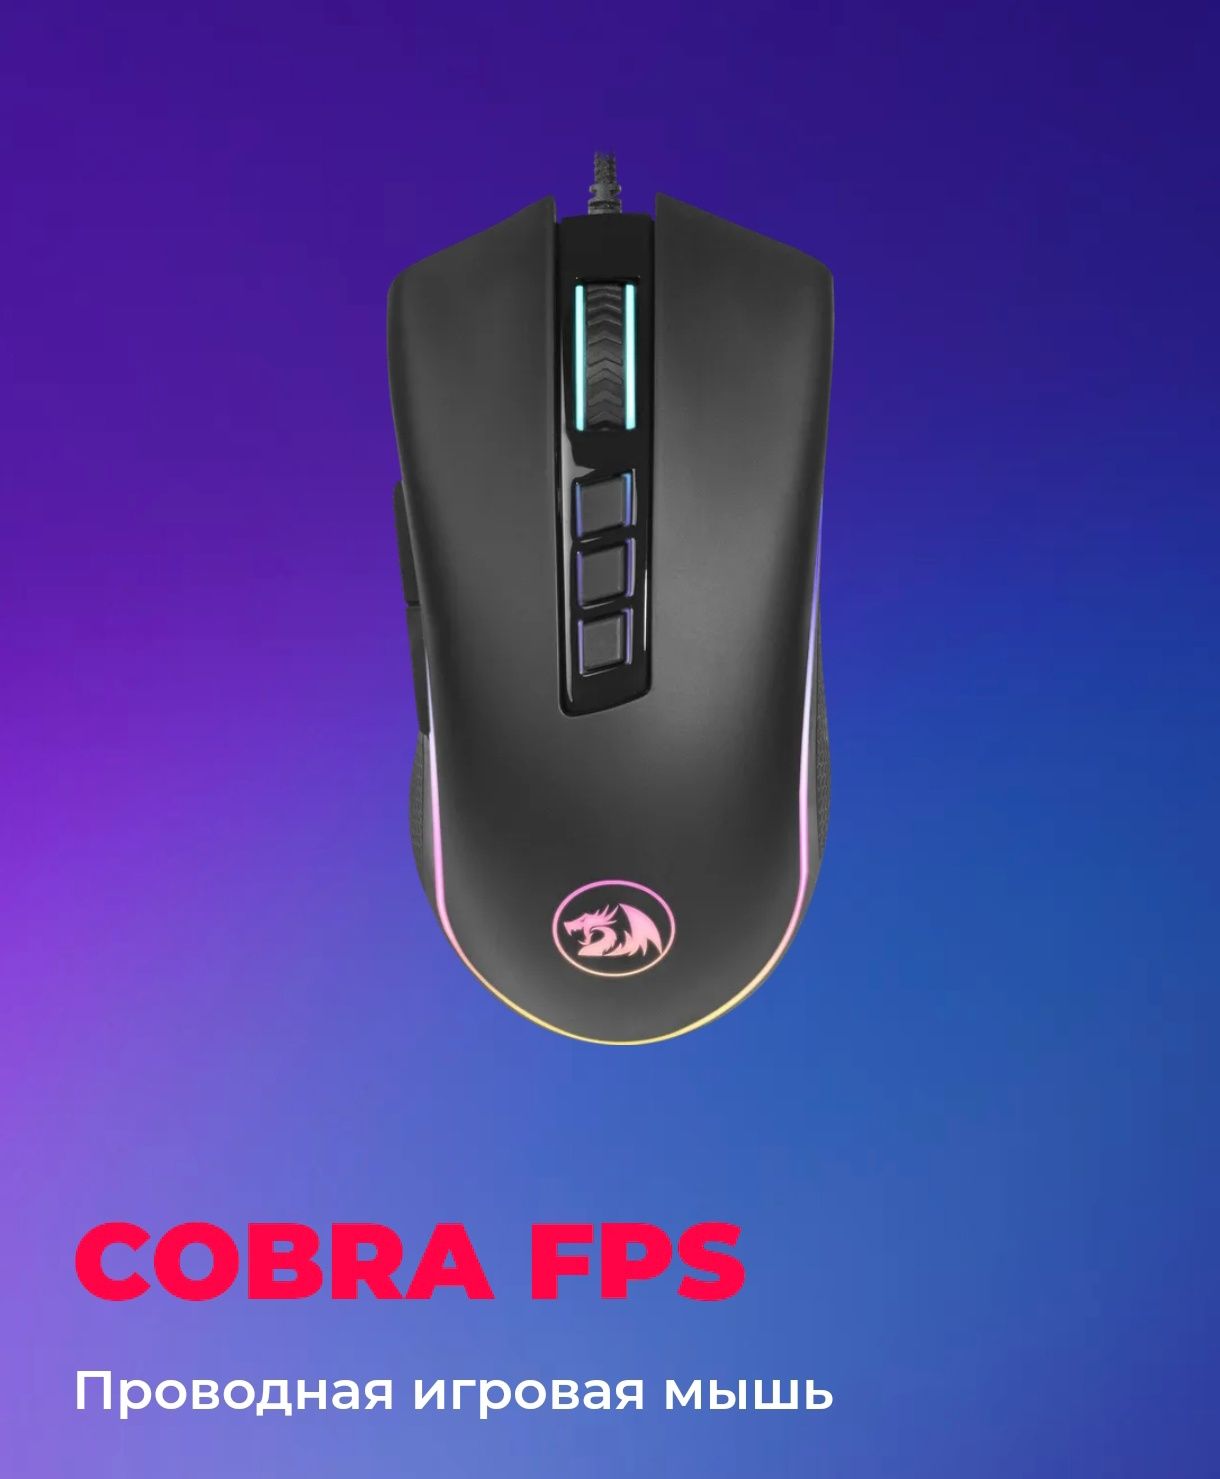 Redragon cobra FPS